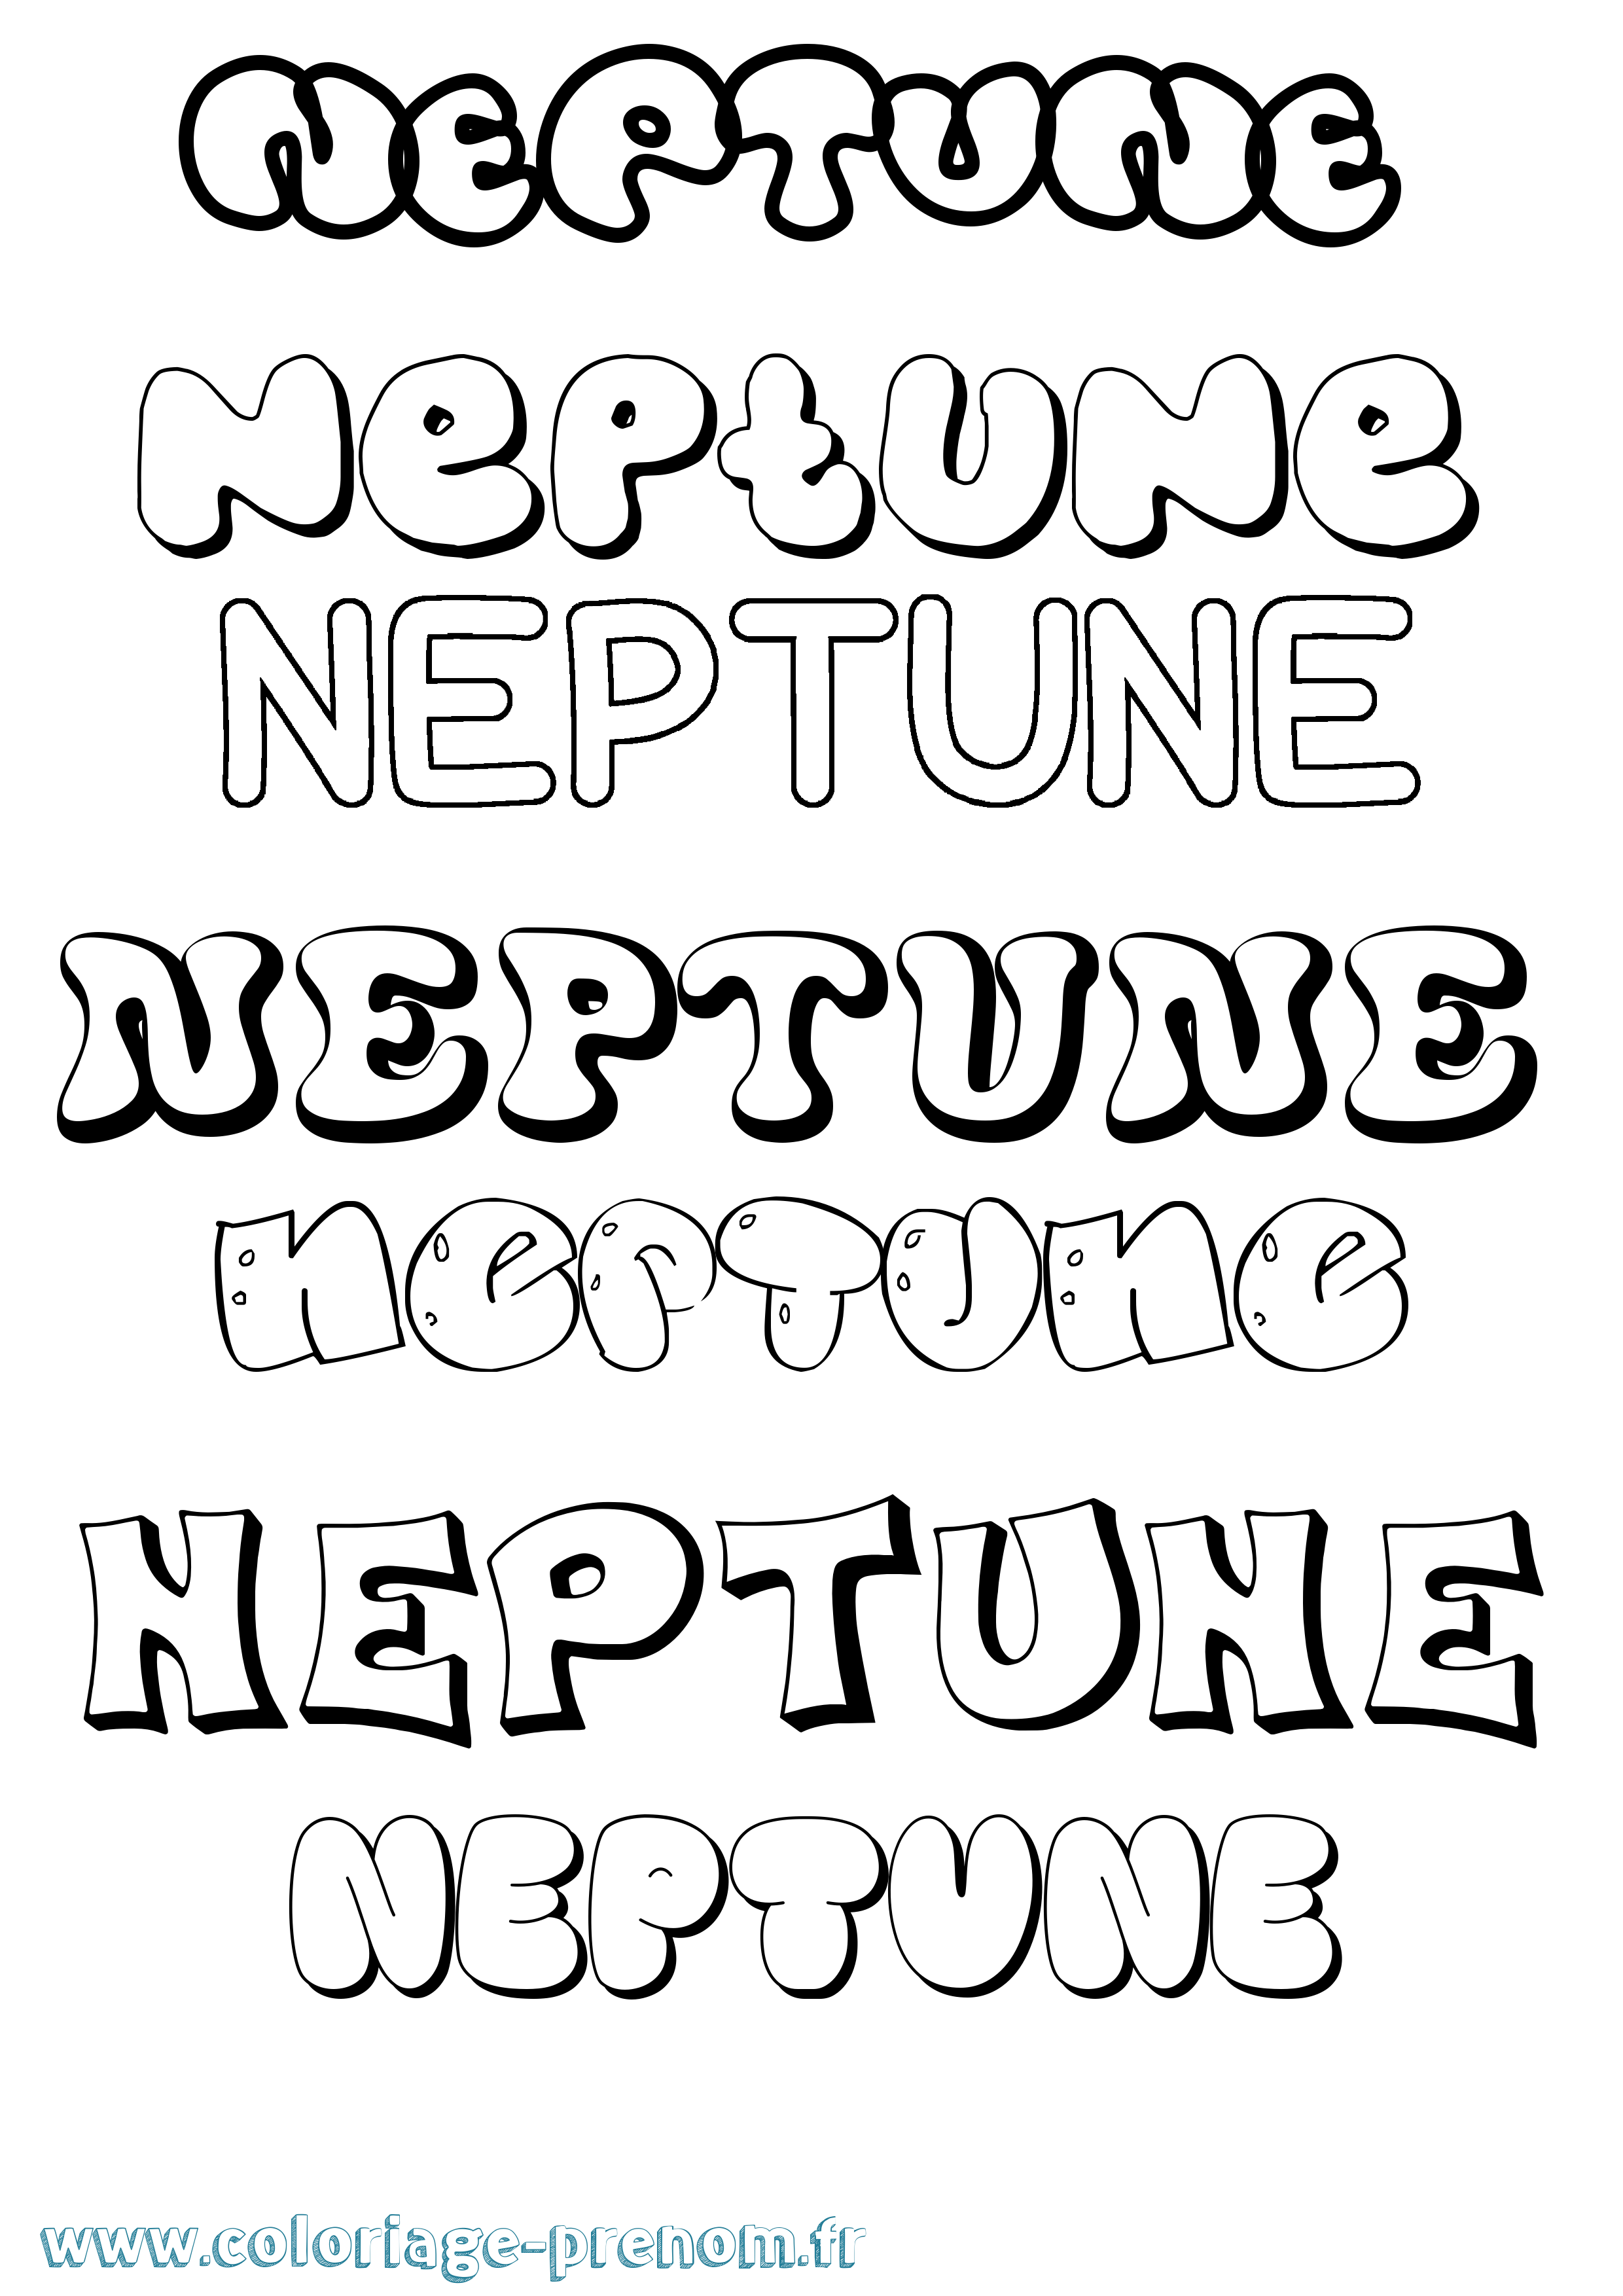 Coloriage prénom Neptune Bubble